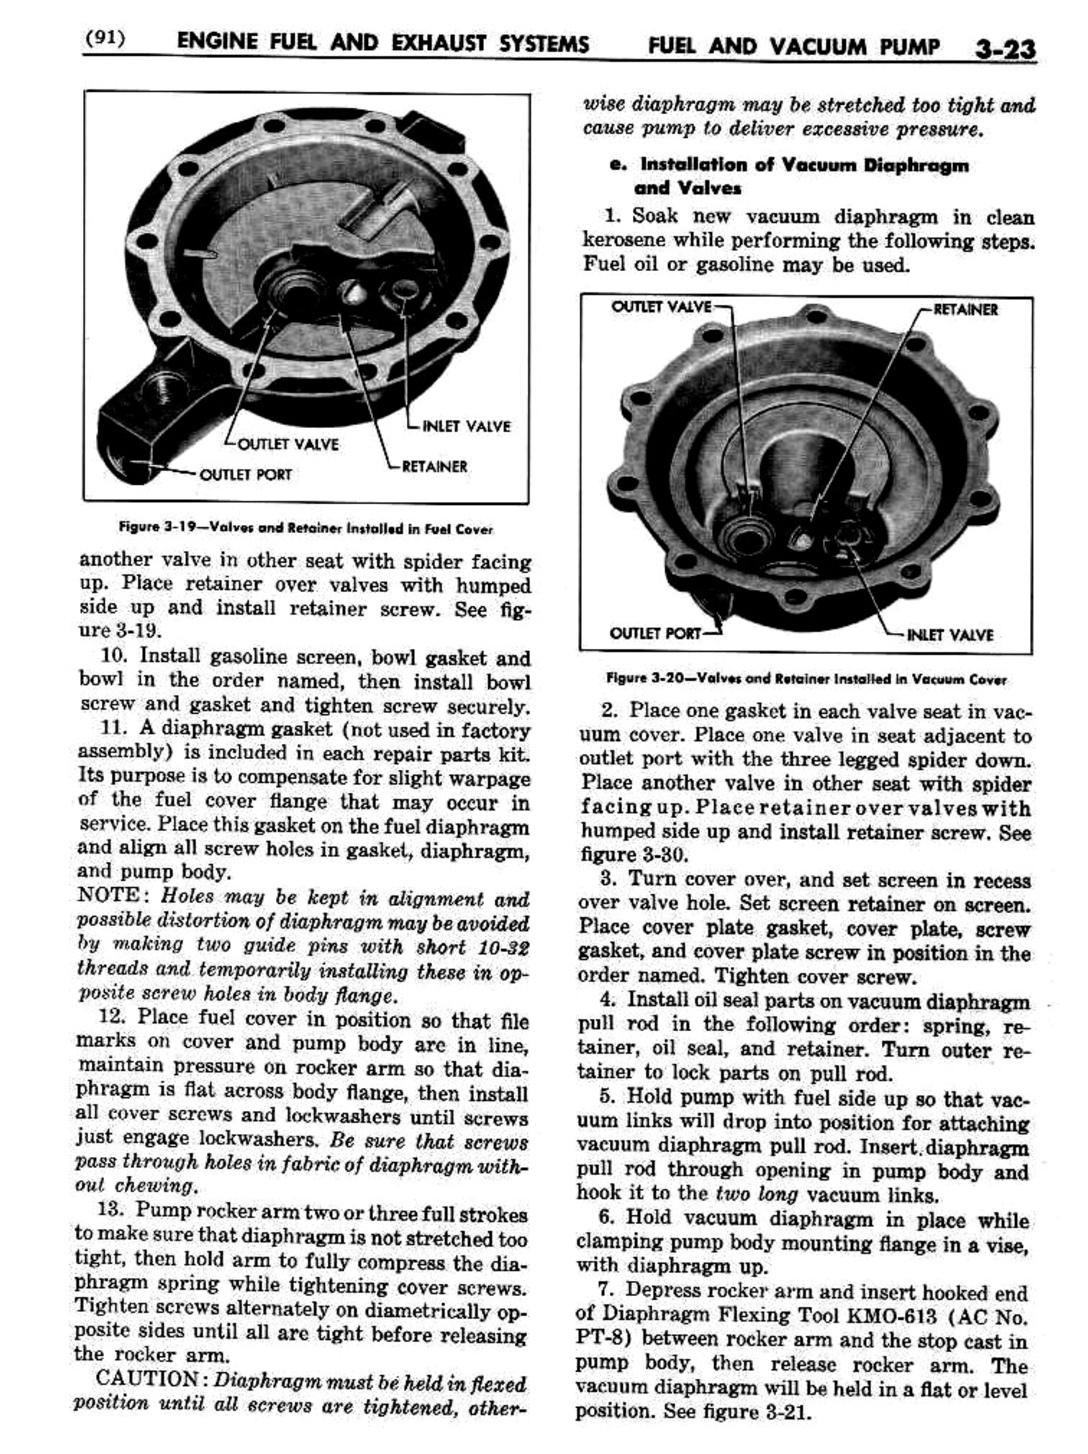 n_04 1951 Buick Shop Manual - Engine Fuel & Exhaust-023-023.jpg